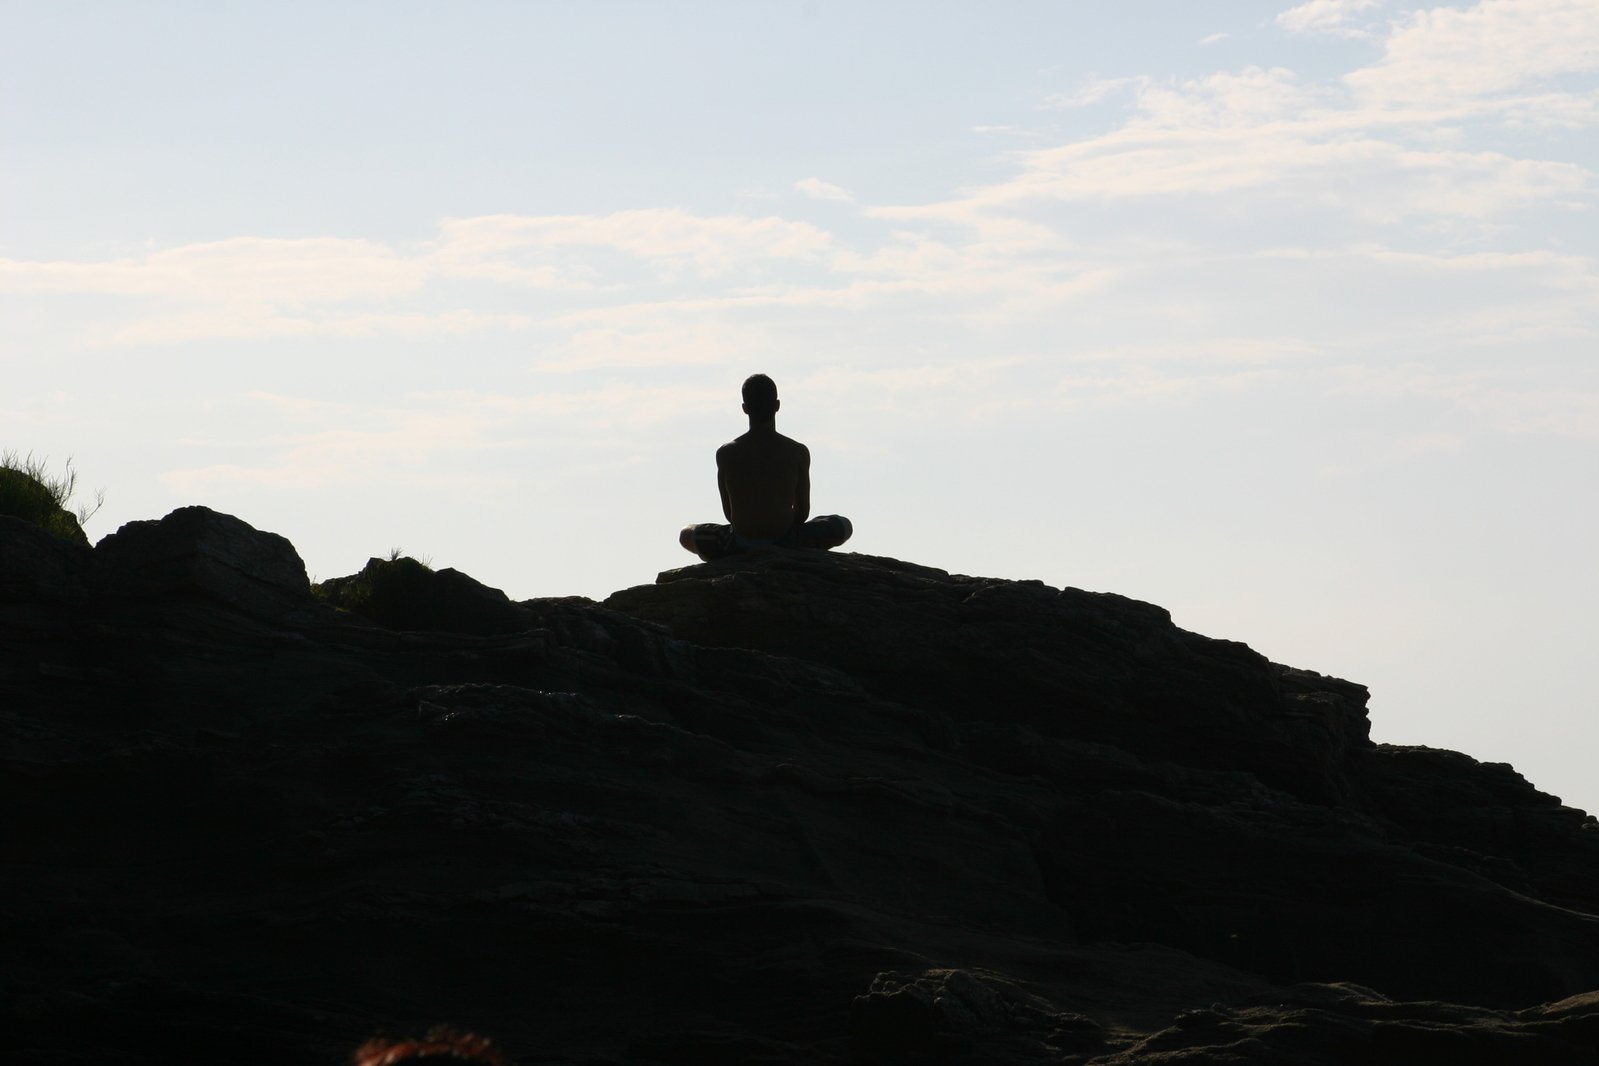 A person meditates